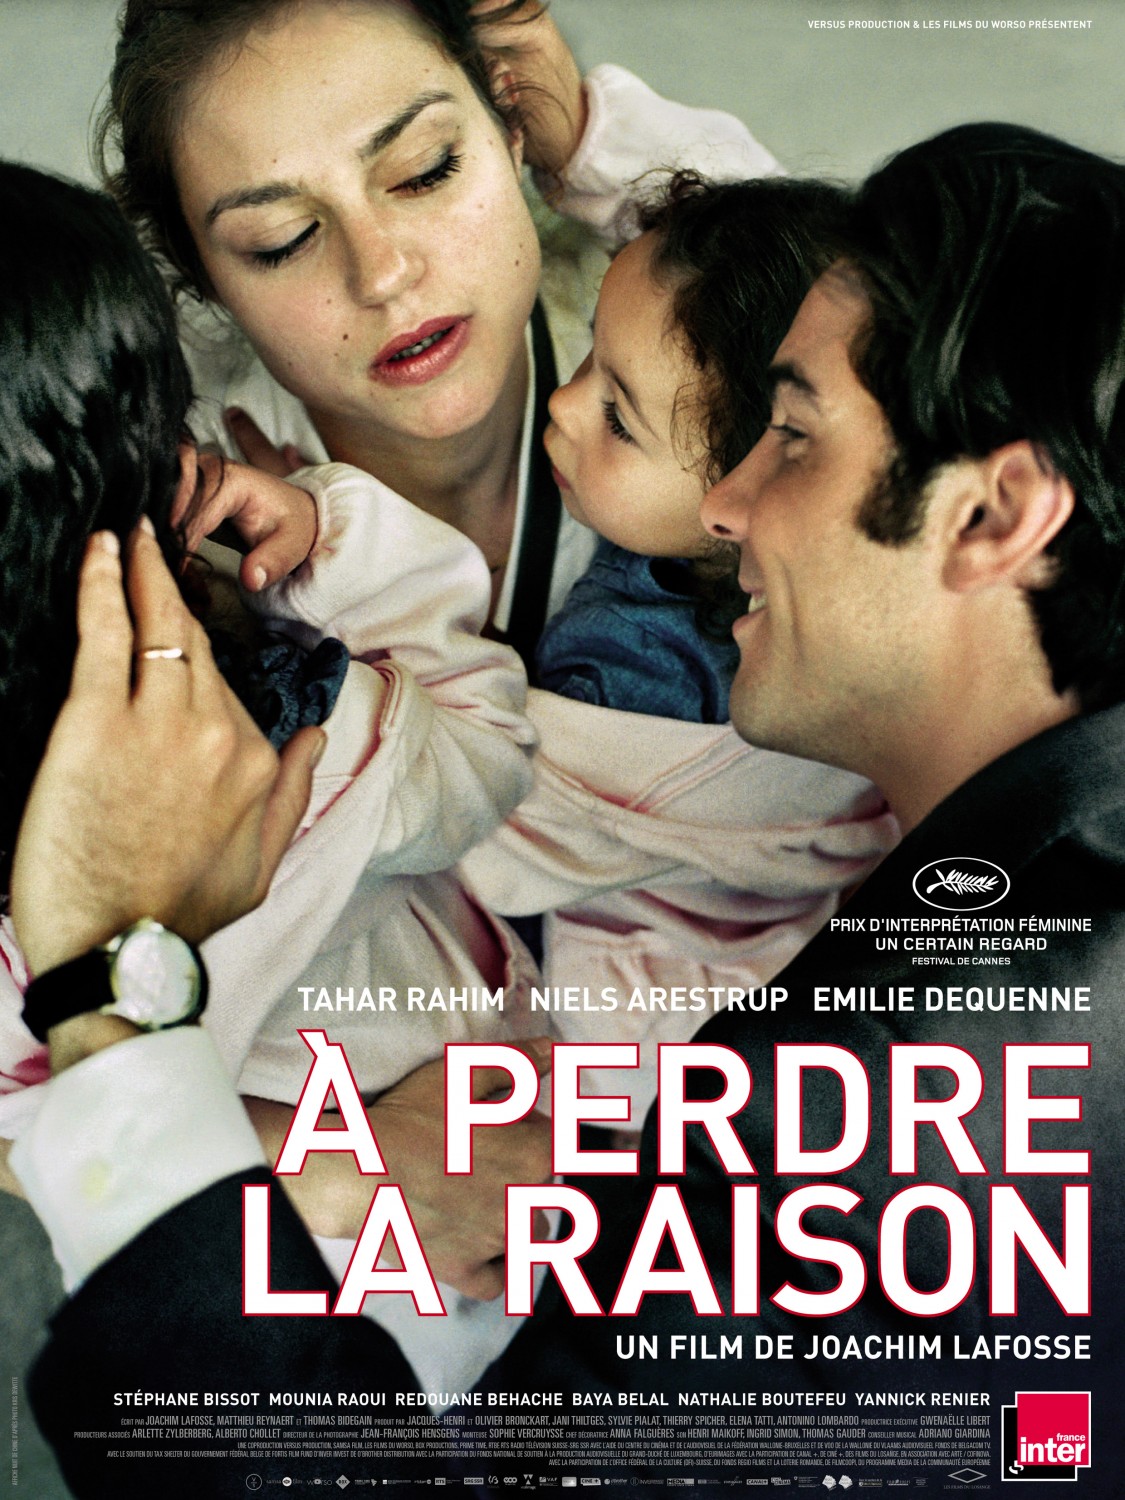 Extra Large Movie Poster Image for À perdre la raison (#2 of 2)